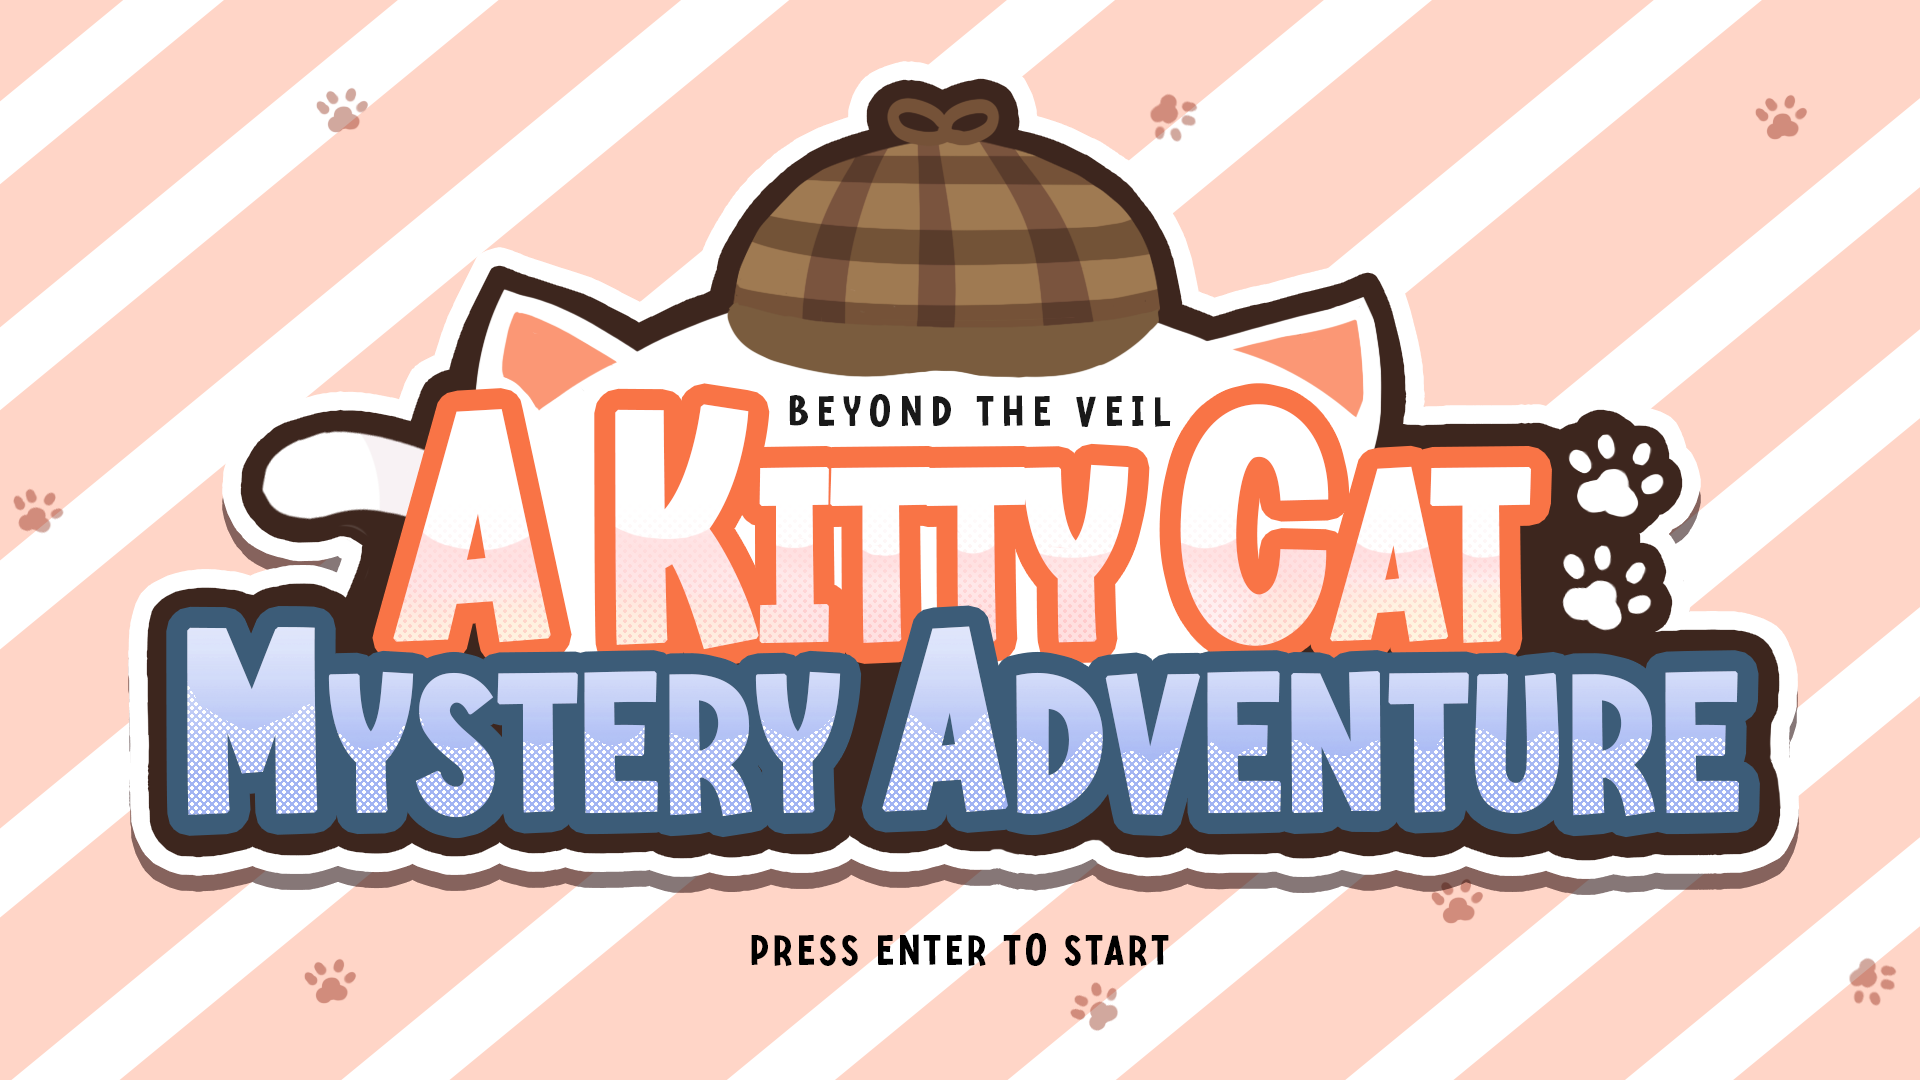 Beyond the Veil: A Kitty Cat Mystery Adventure